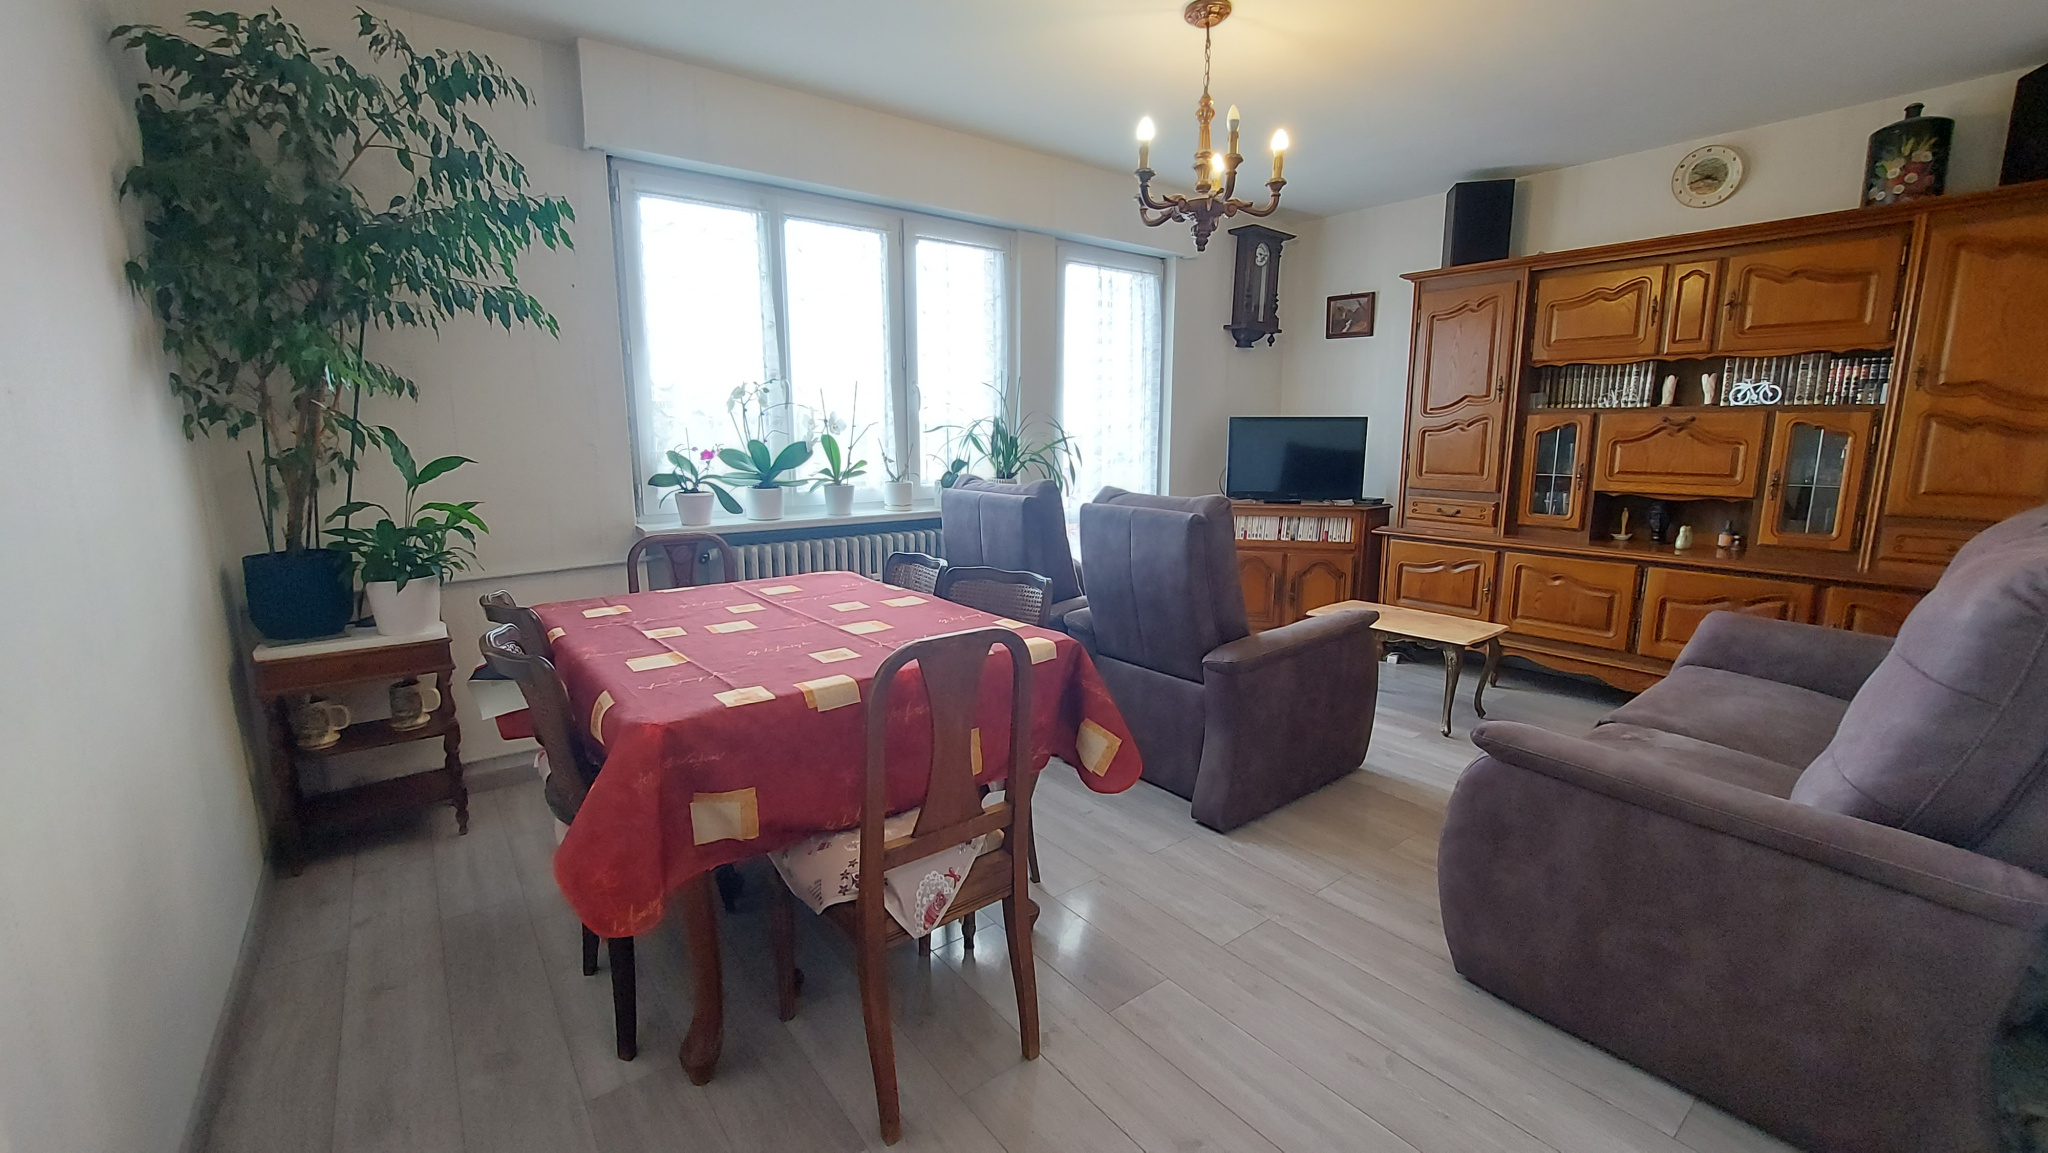 Vente Appartement 85m² 4 Pièces à Obernai (67210) - A4 Immo